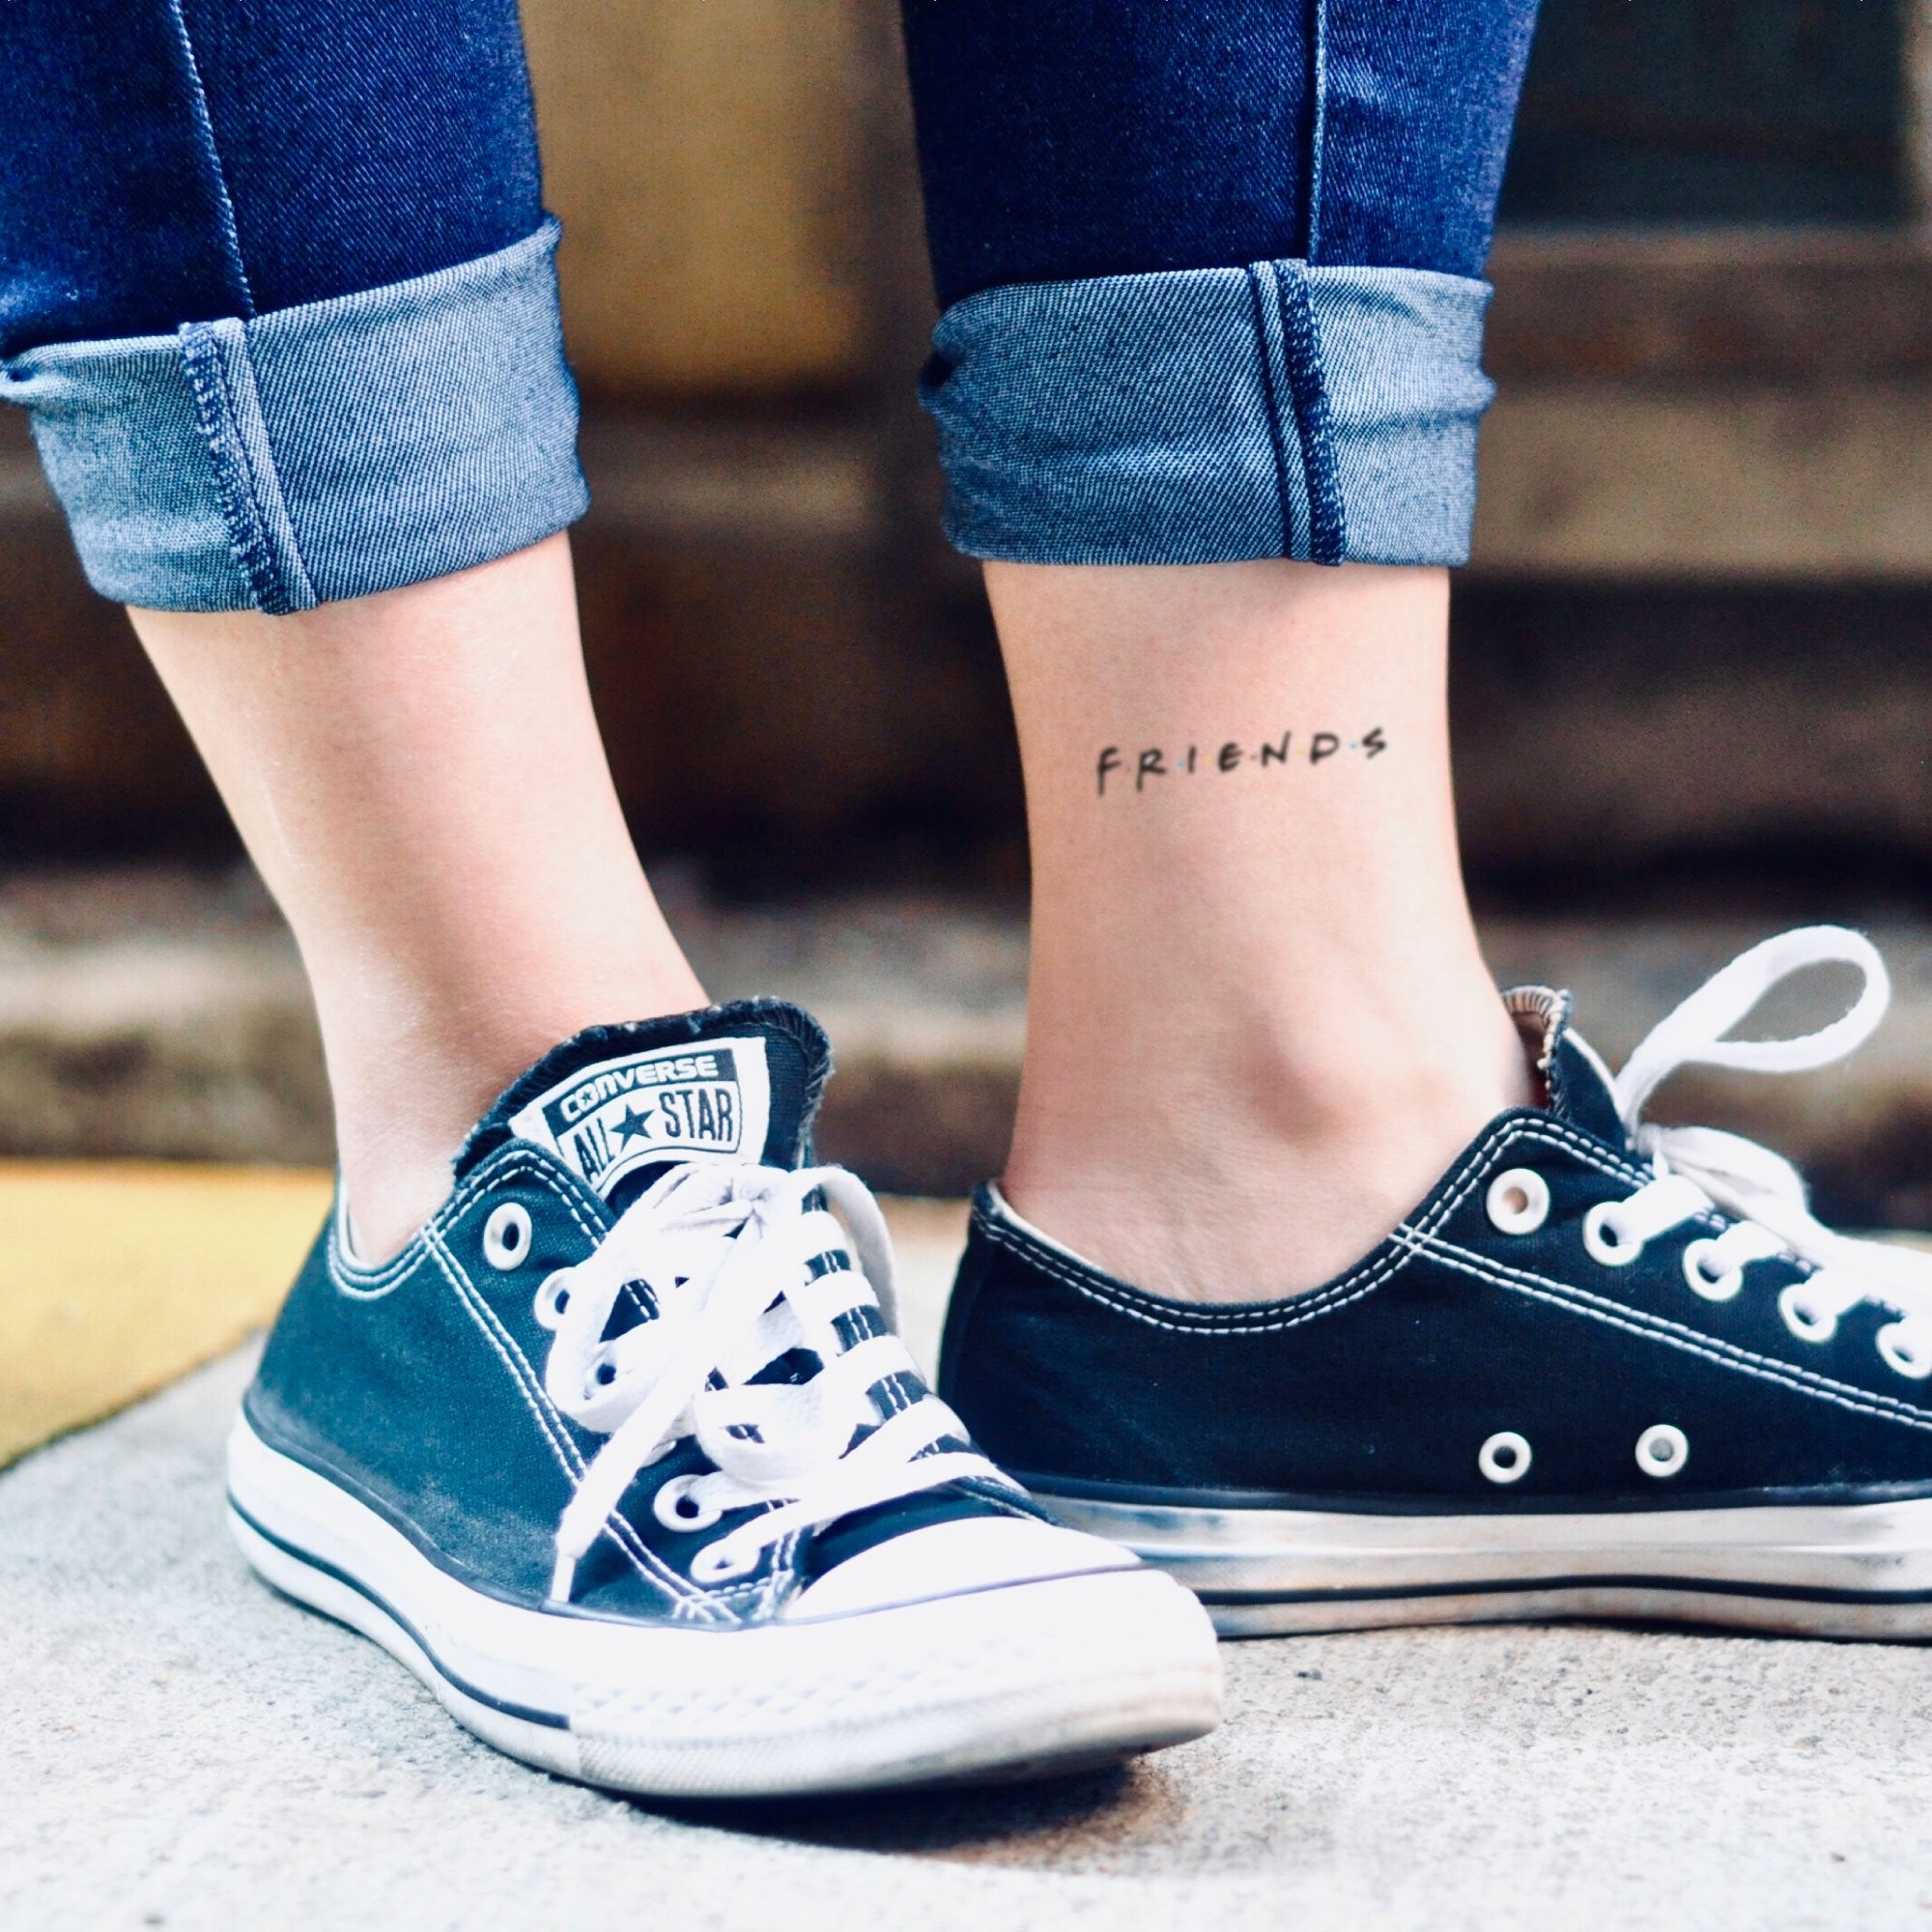 Small Friends TV Show Lettering Temporary Tattoo Sticker Design Idea Ankle